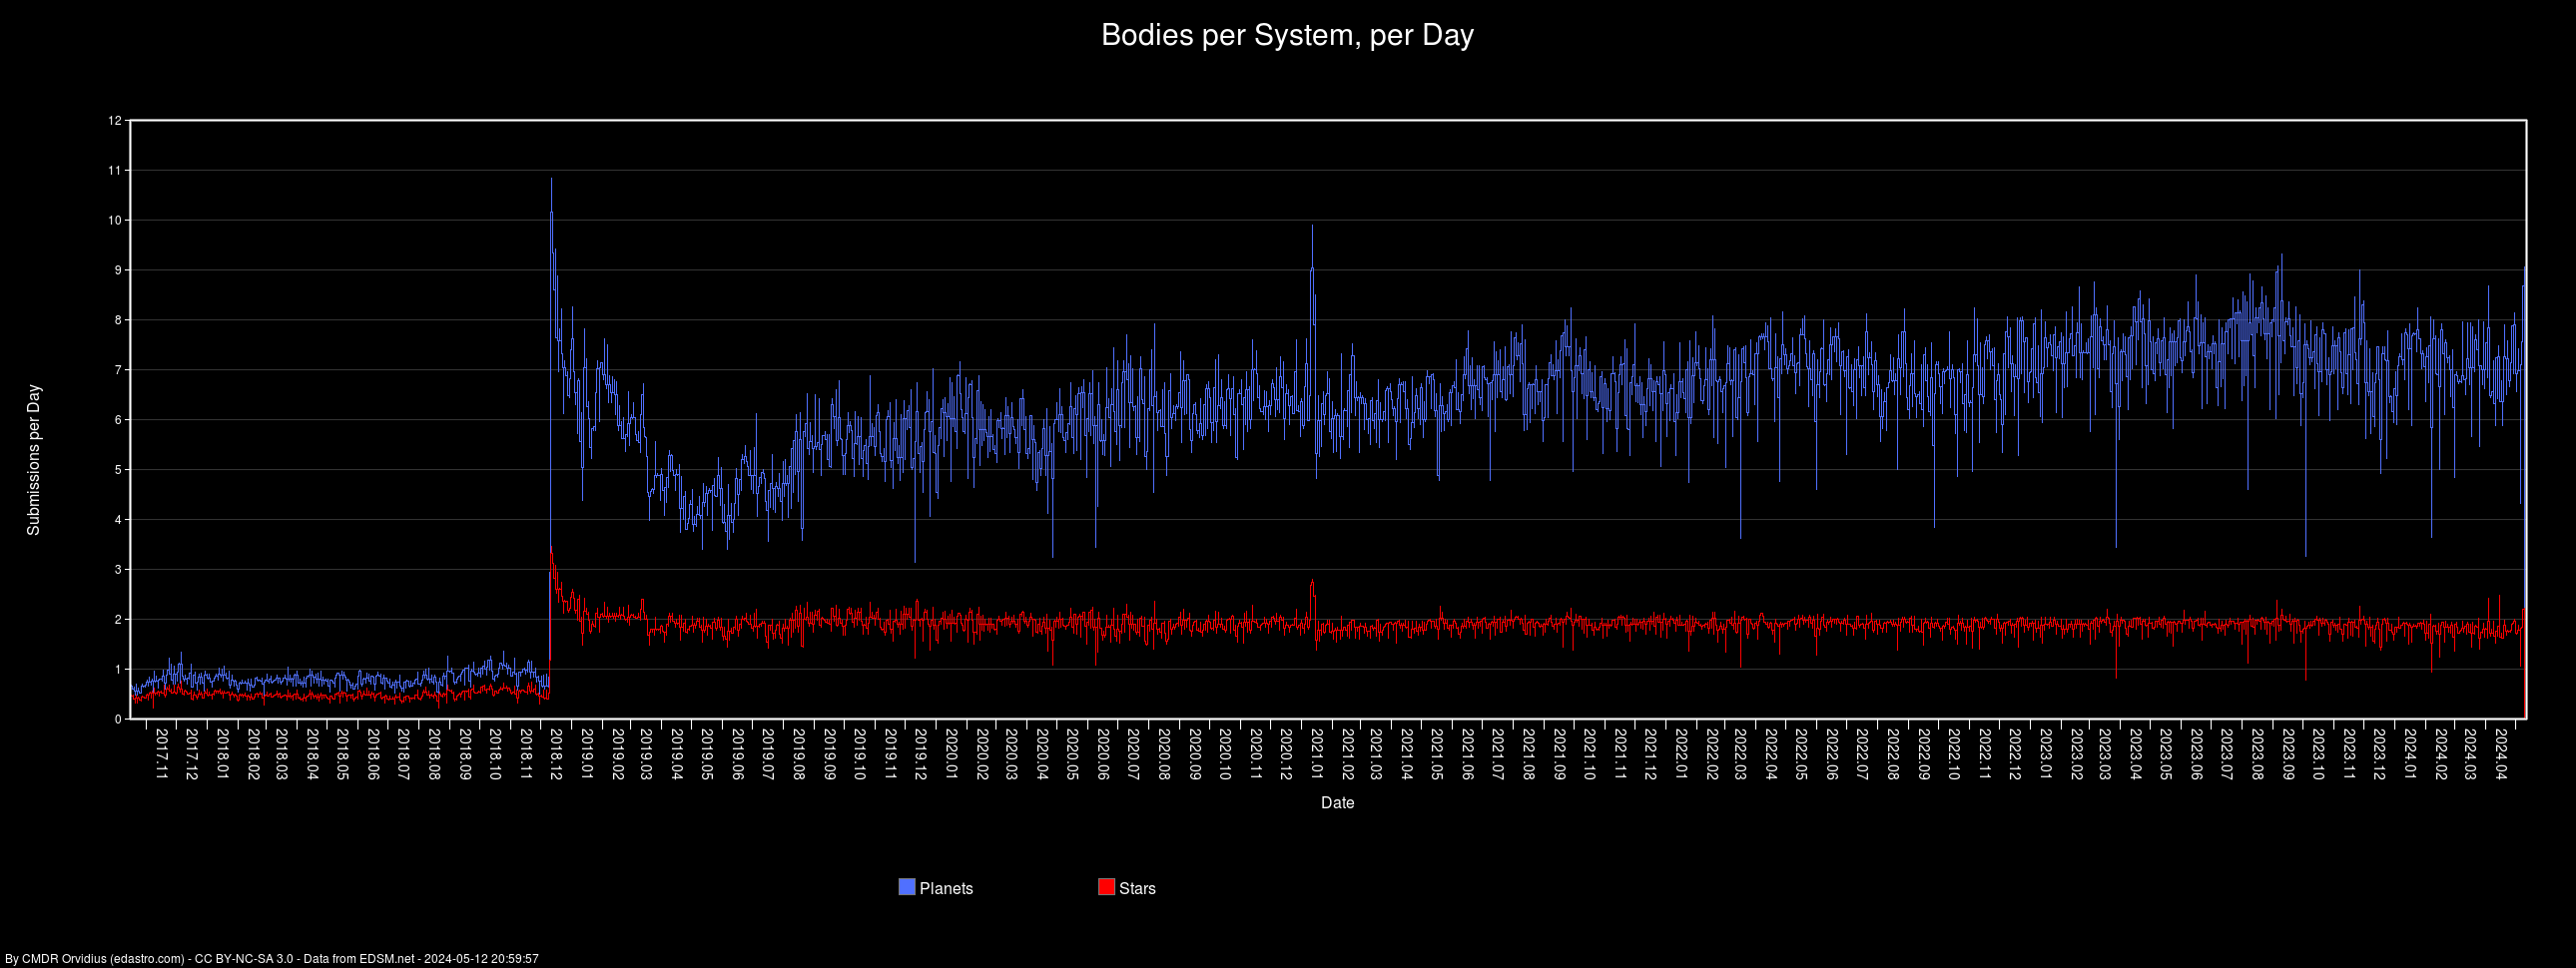 bodiespersystem.png